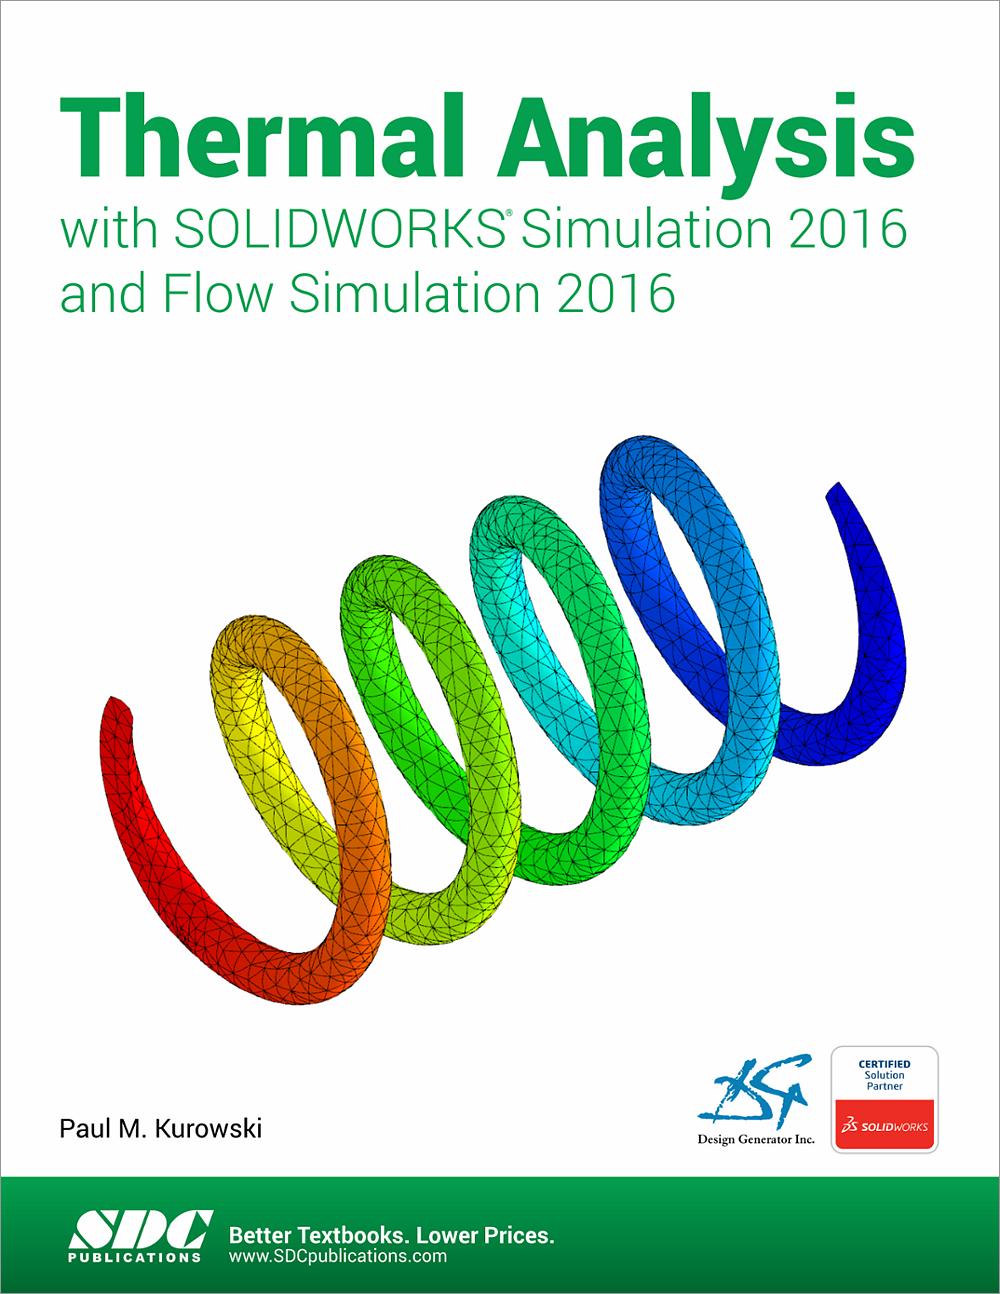 Solidworks flow simulation 2016 download adobe acrobat x pro download free for mac